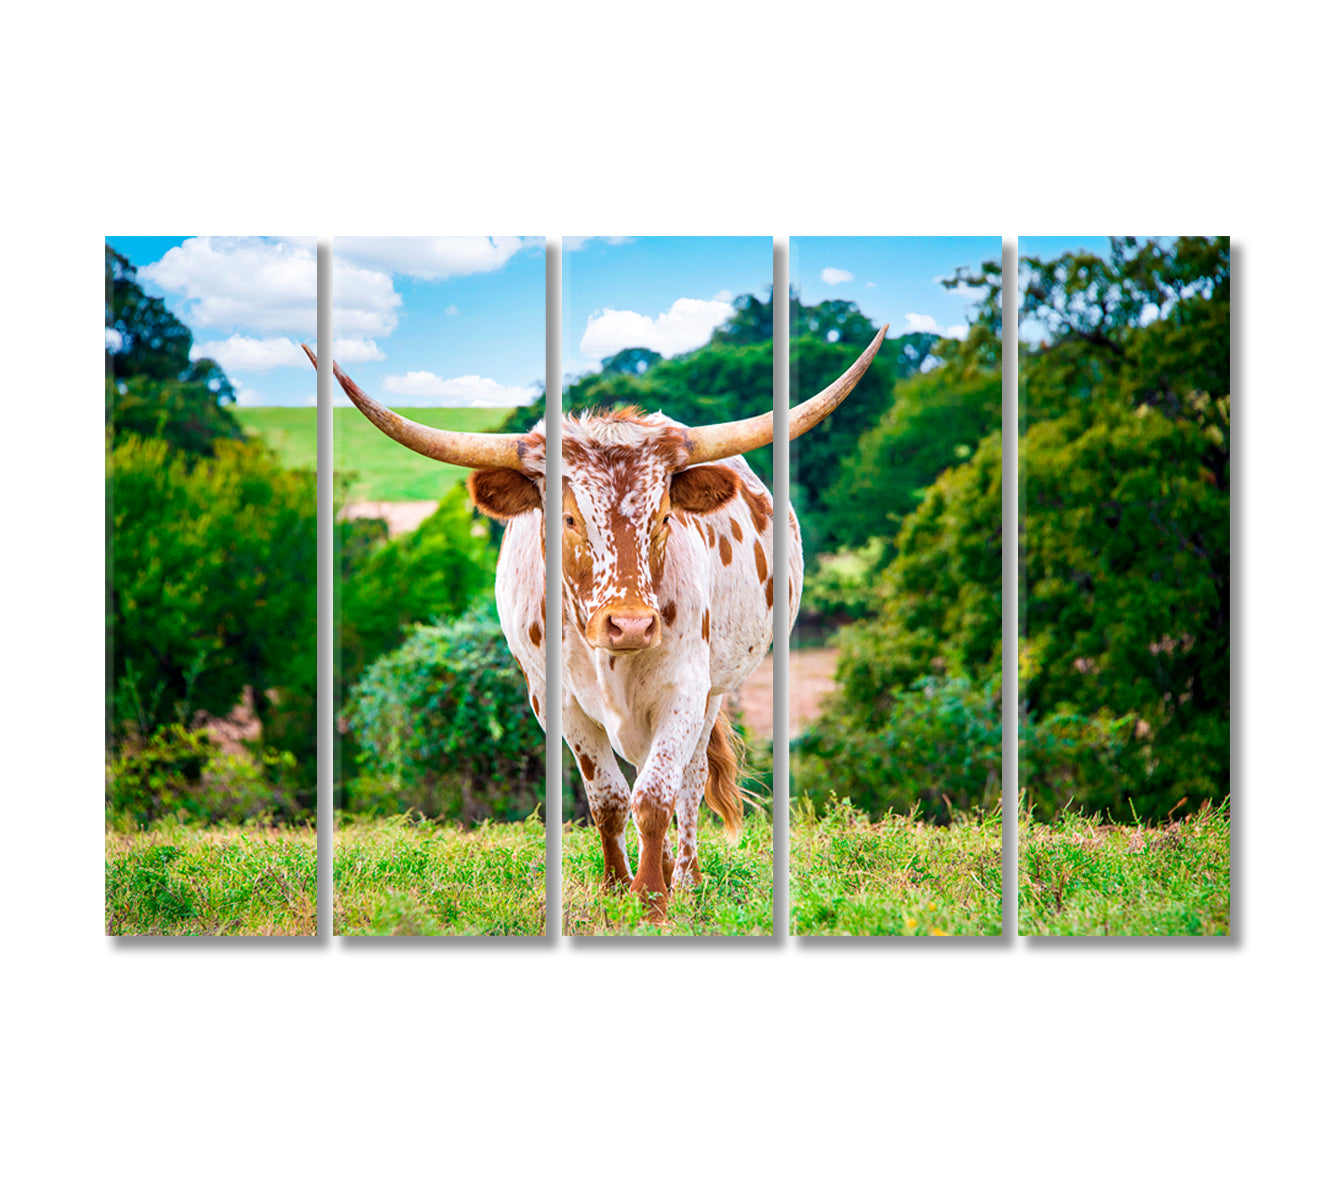 Texas Longhorn Cattle in a Summer Pasture Canvas Print-Canvas Print-CetArt-5 Panels-36x24 inches-CetArt